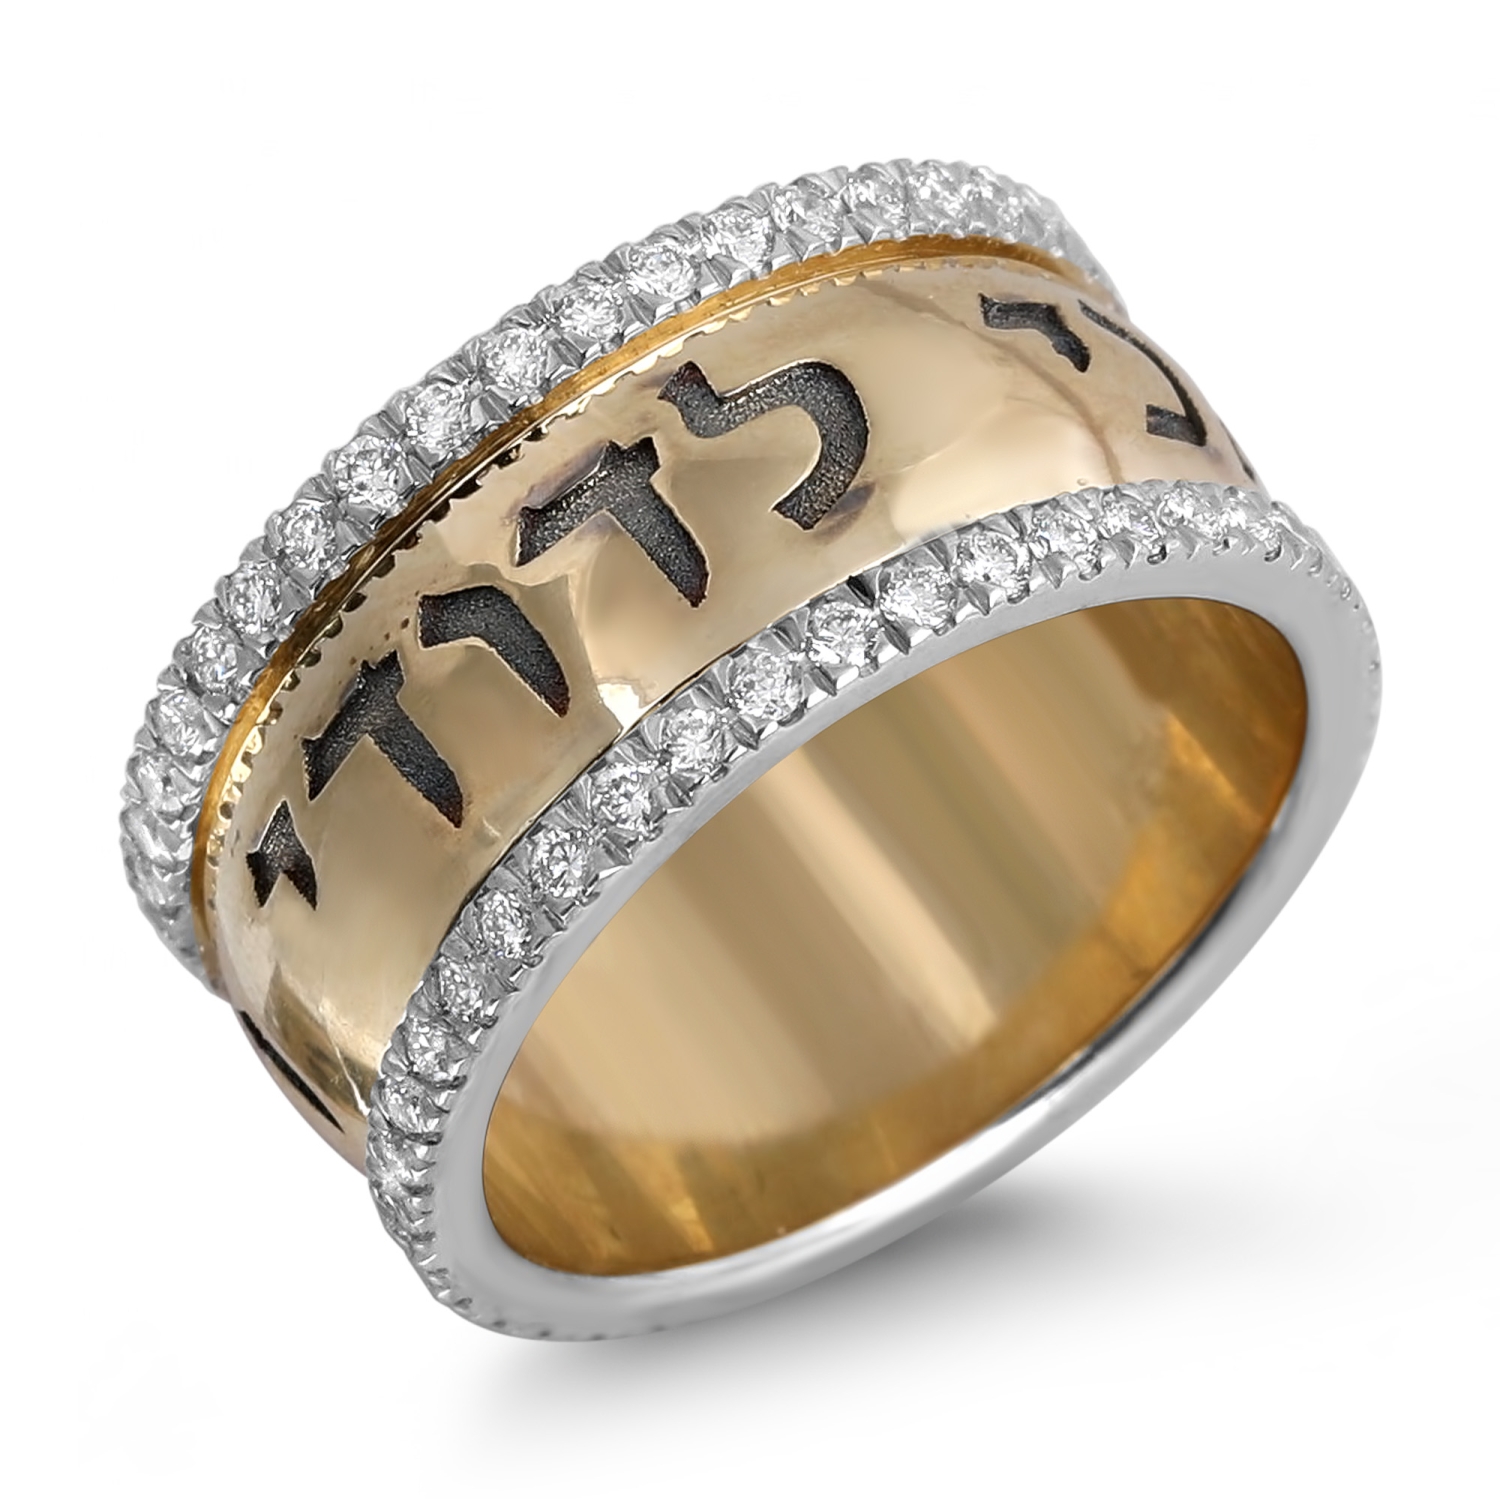 14K Yellow Gold Ani Ledodi Jewish Wedding Ring with Diamond Borders - 1